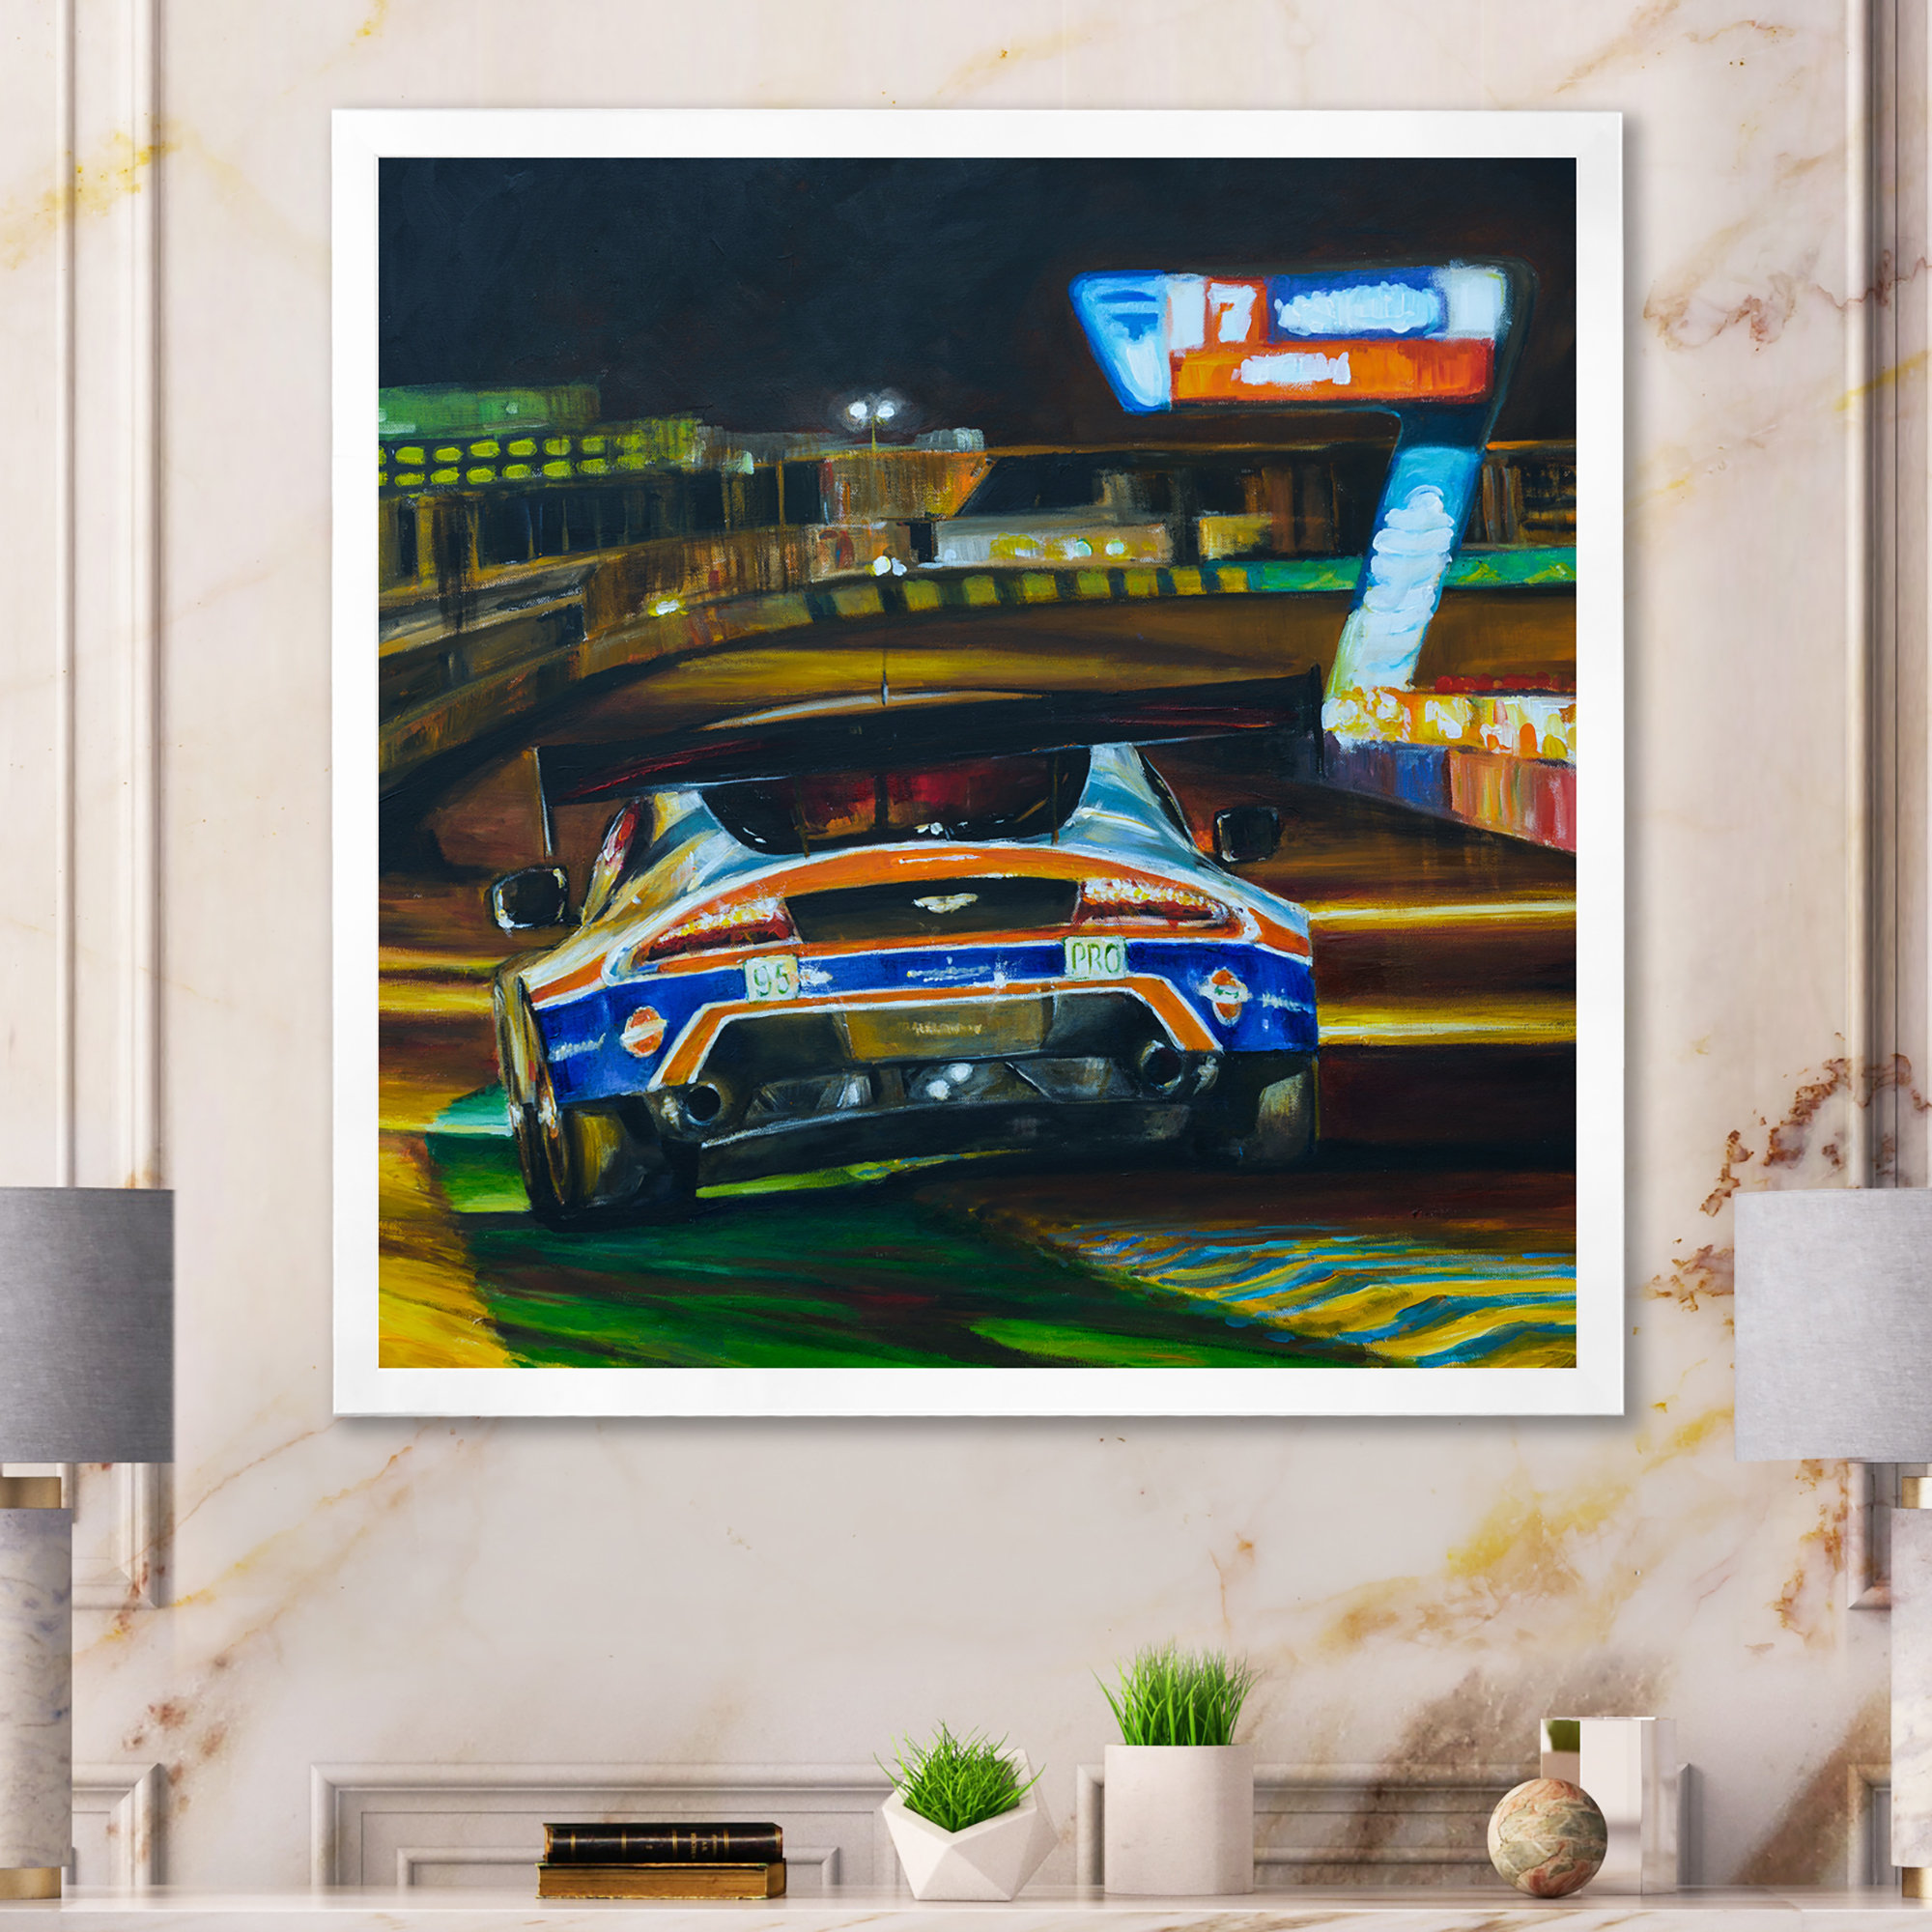 Ebern Designs Competition Race Car Painting Framed On Canvas Print Wayfair